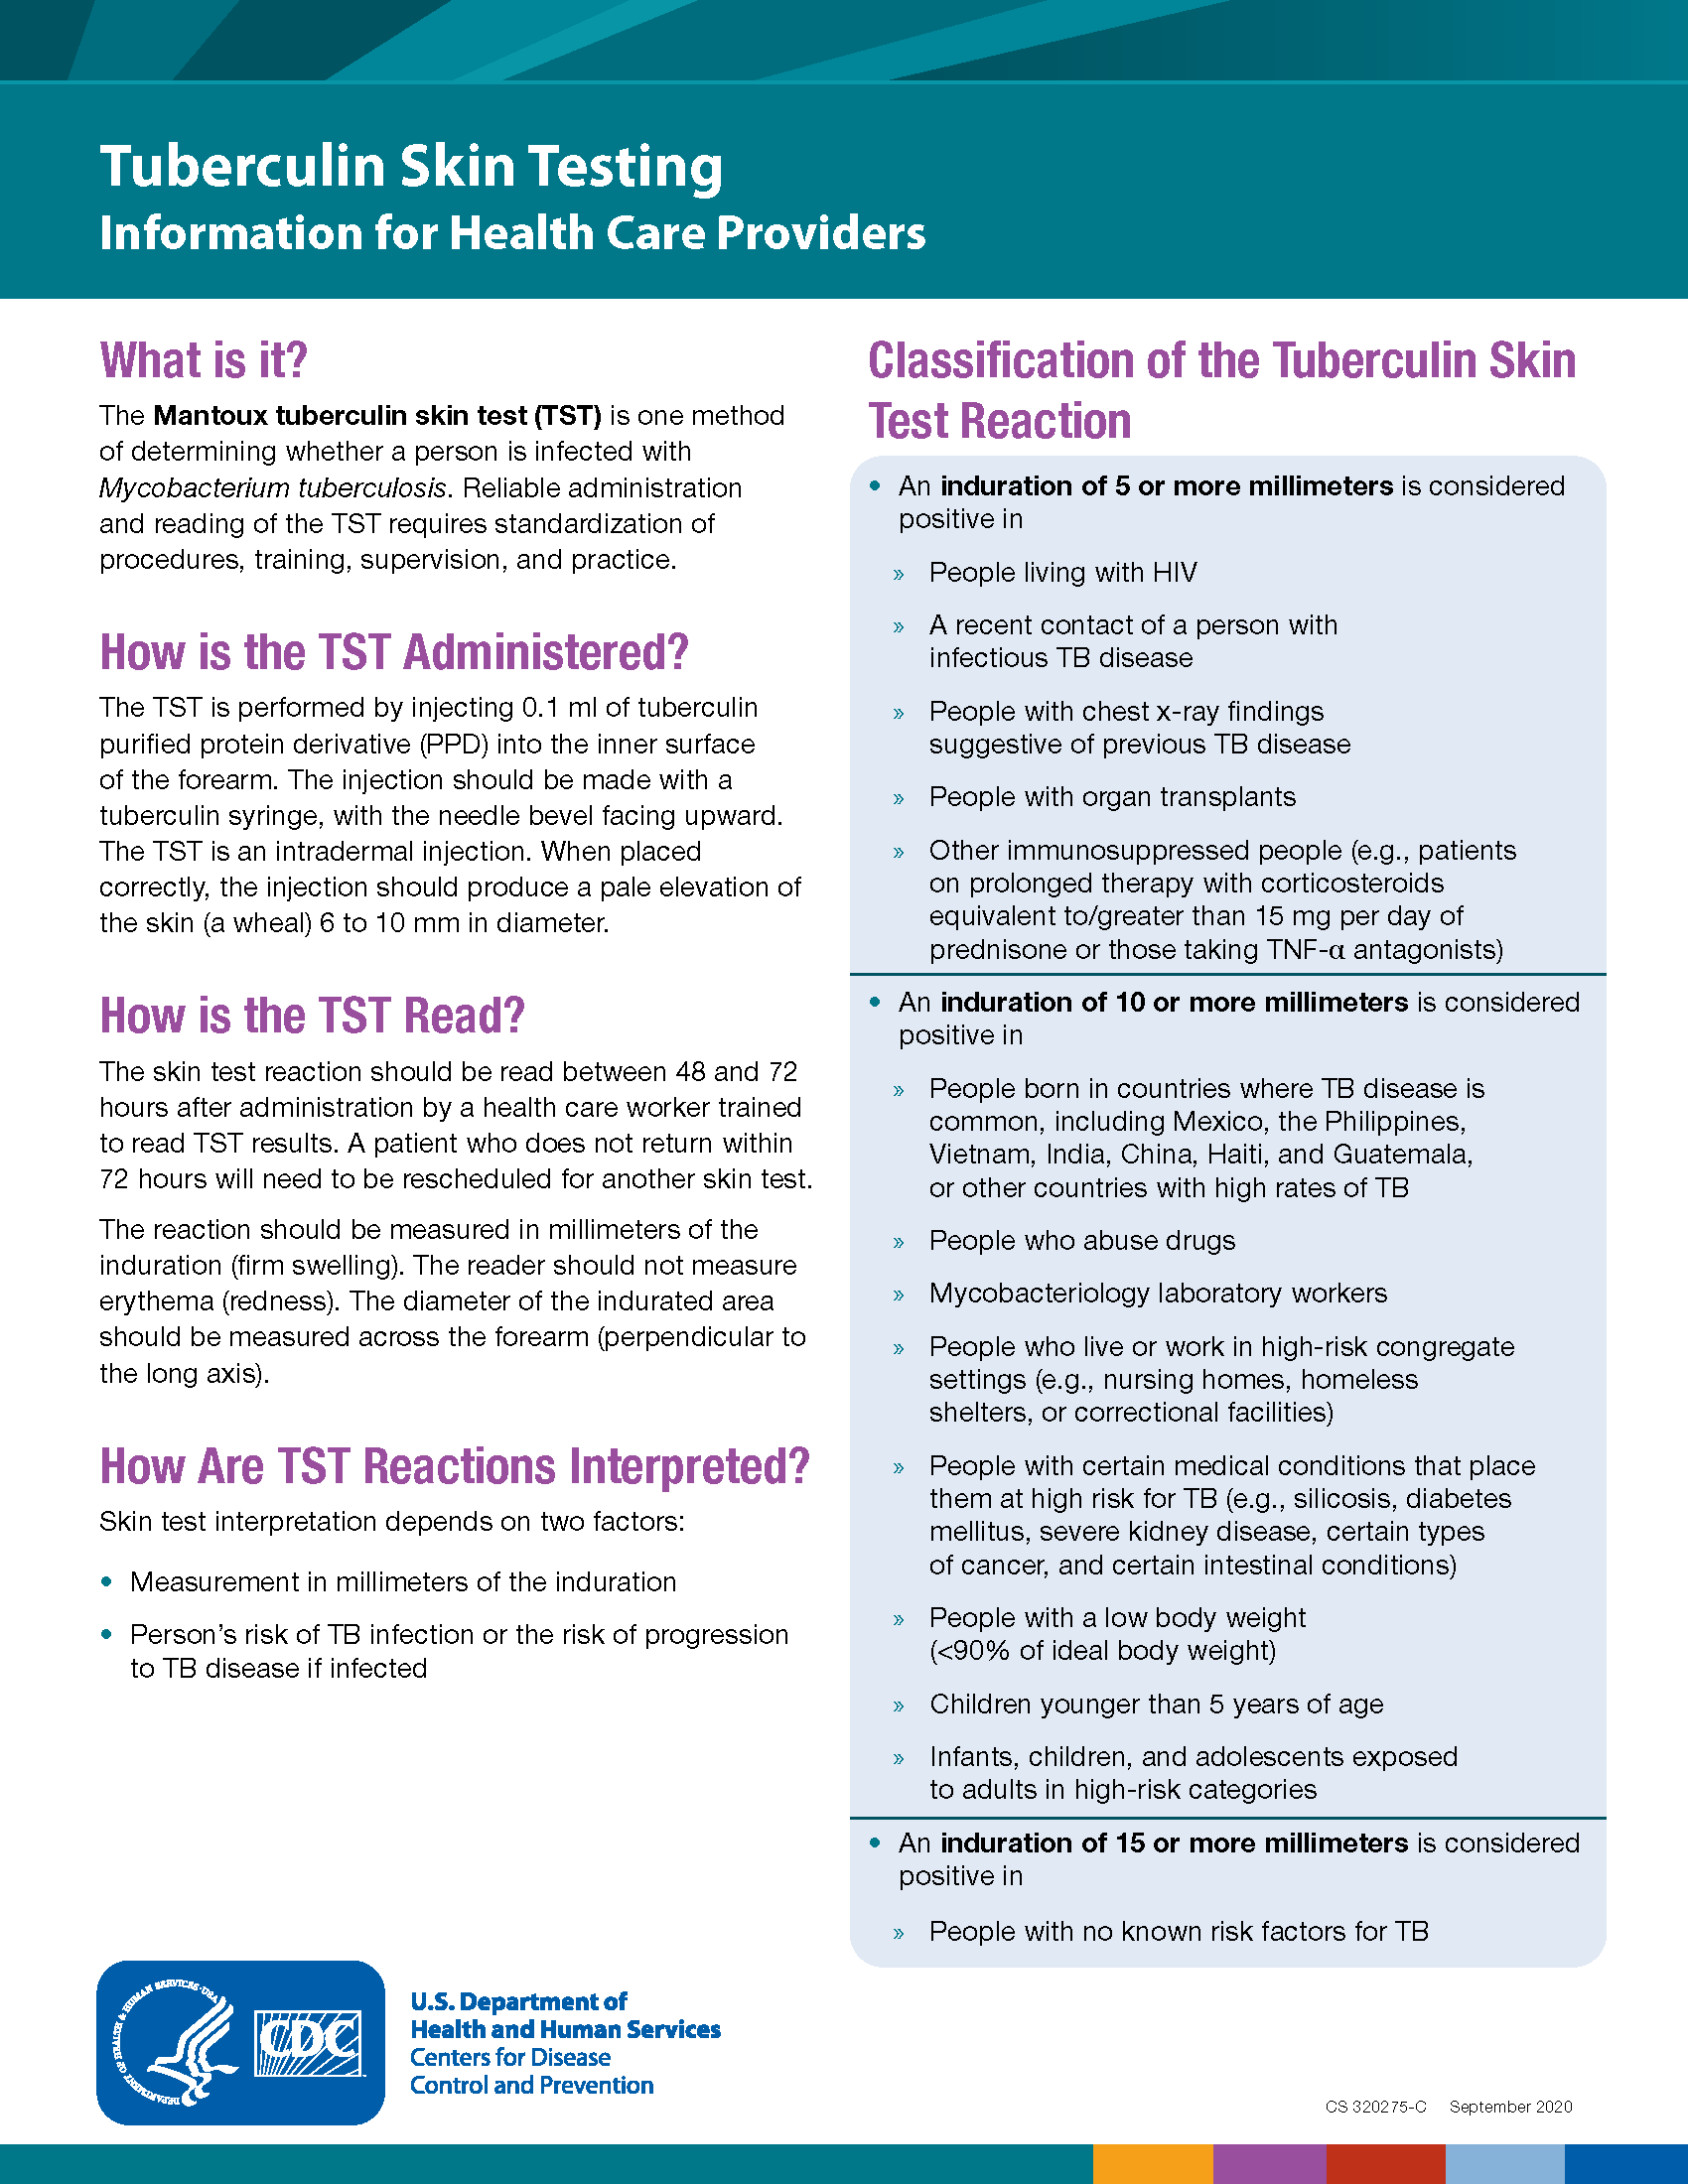 Tuberculin Skin Testing Information for Health Care Provider fact sheet